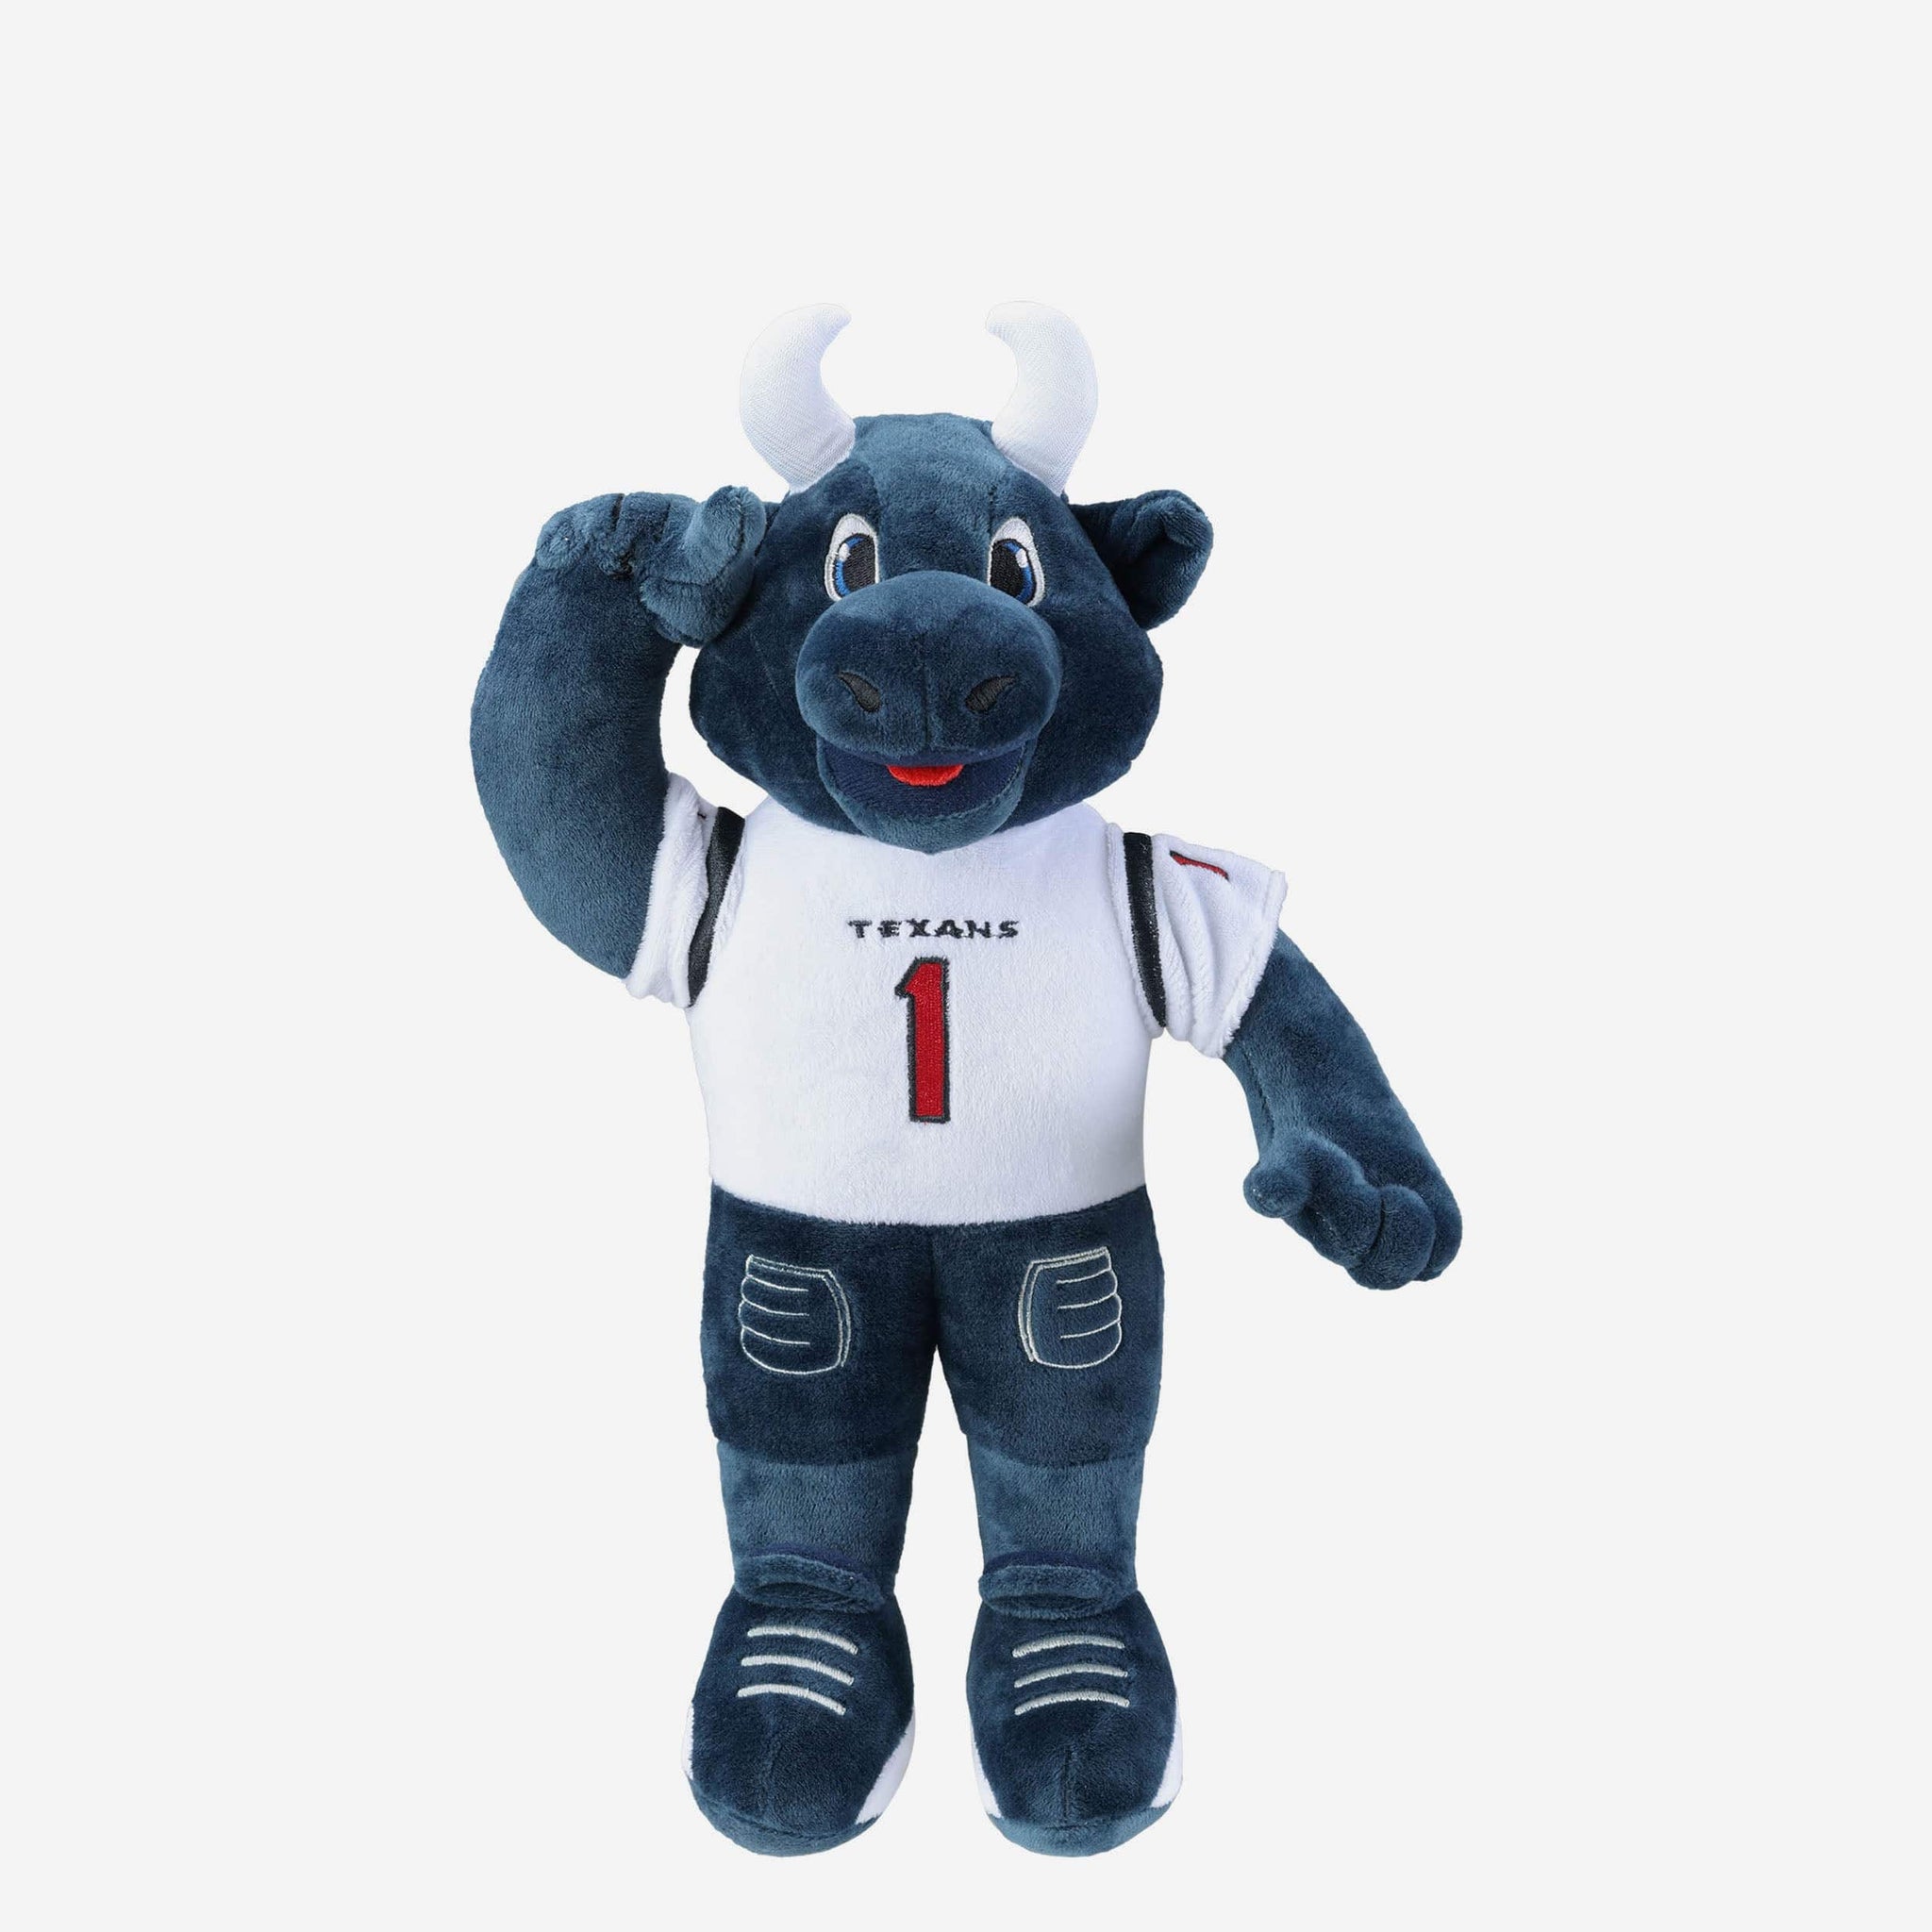  Houston Astros Plush Mascot : Sports Fan Toy Figures : Sports  & Outdoors